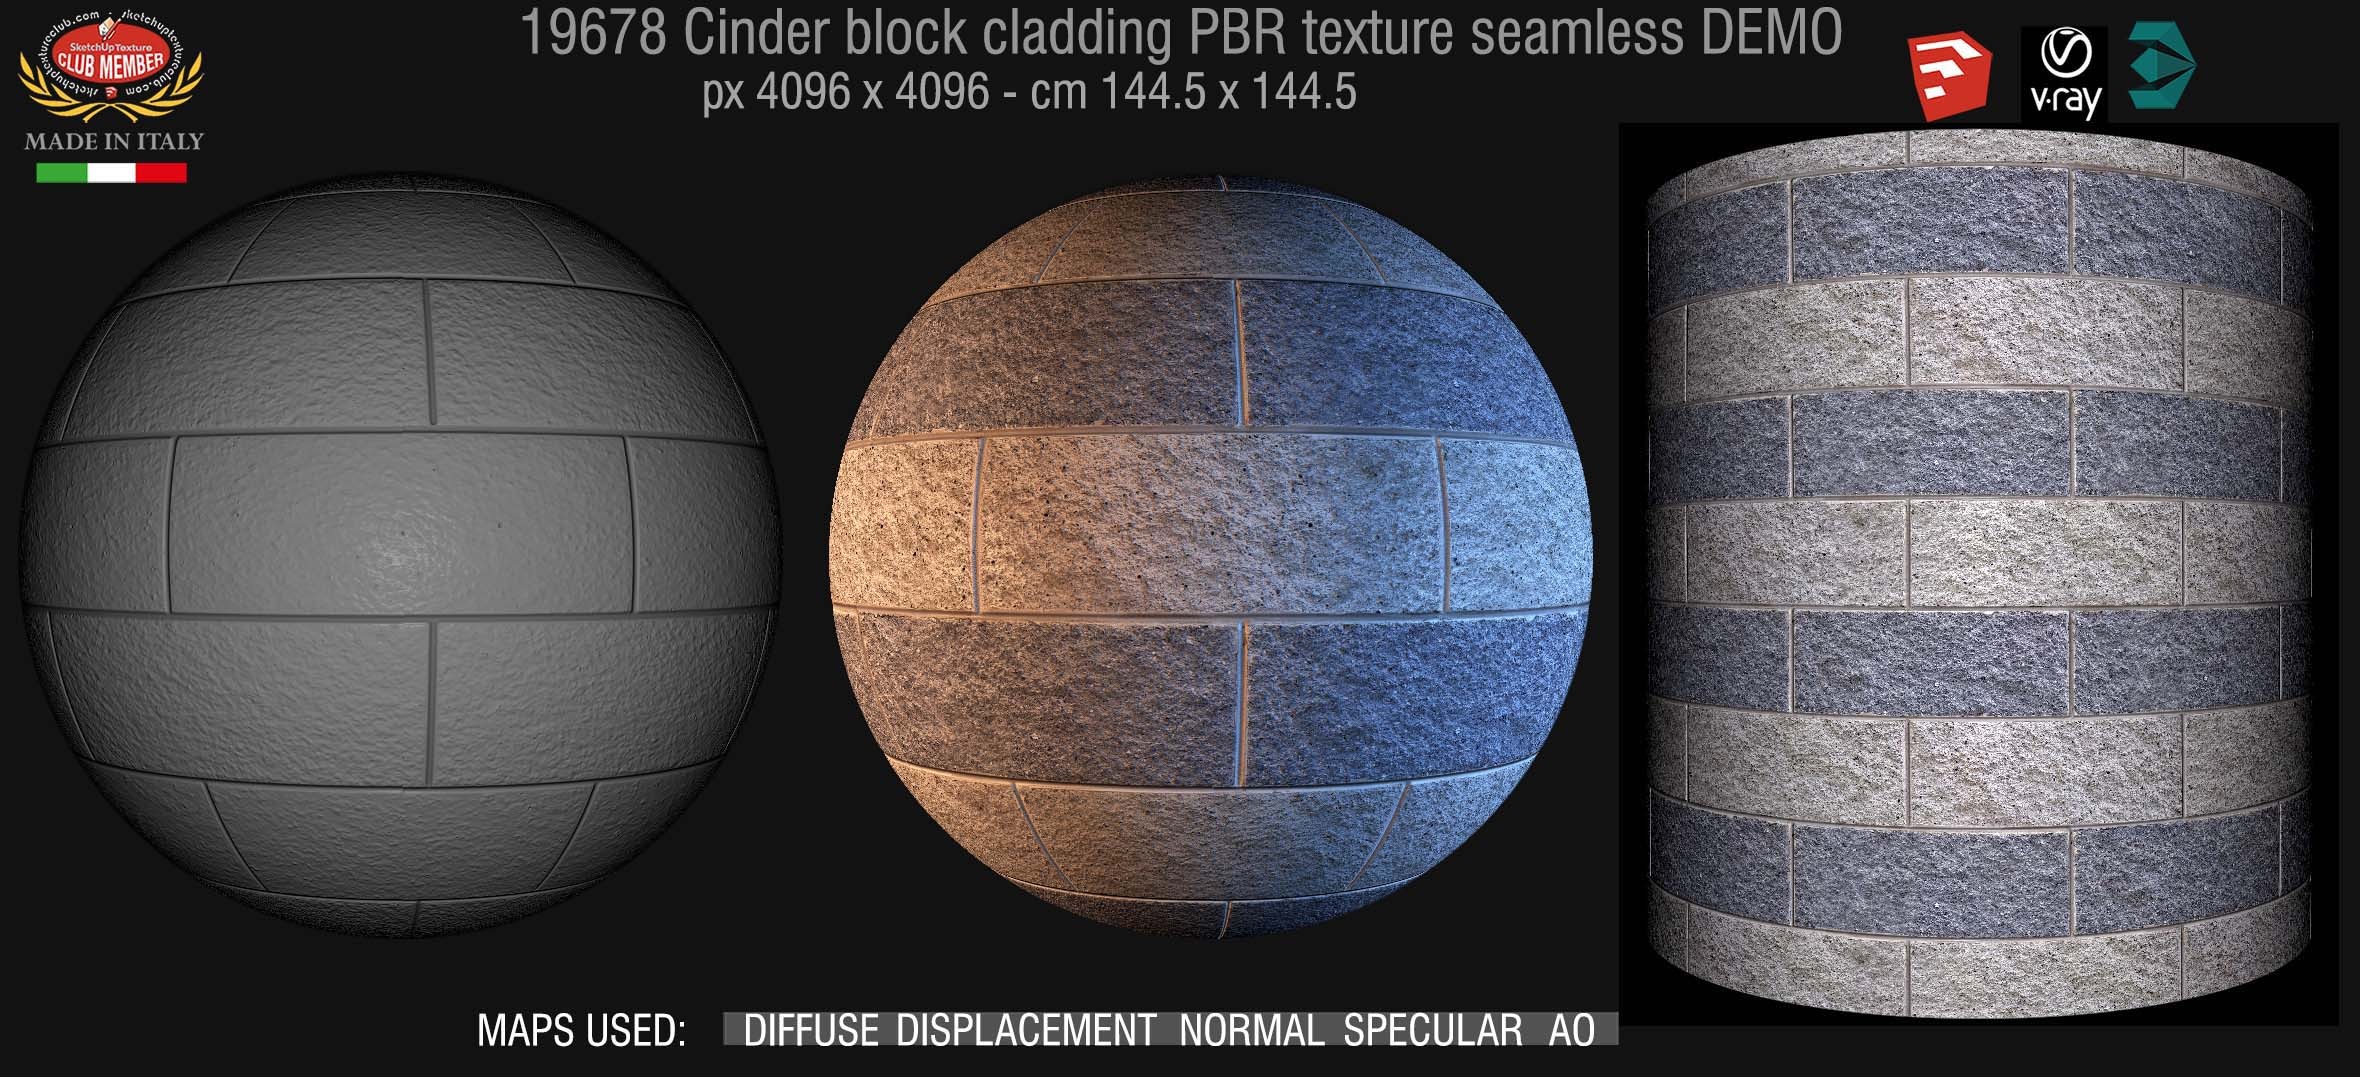 19678 Cinder block cladding PBR texture seamless DEMO